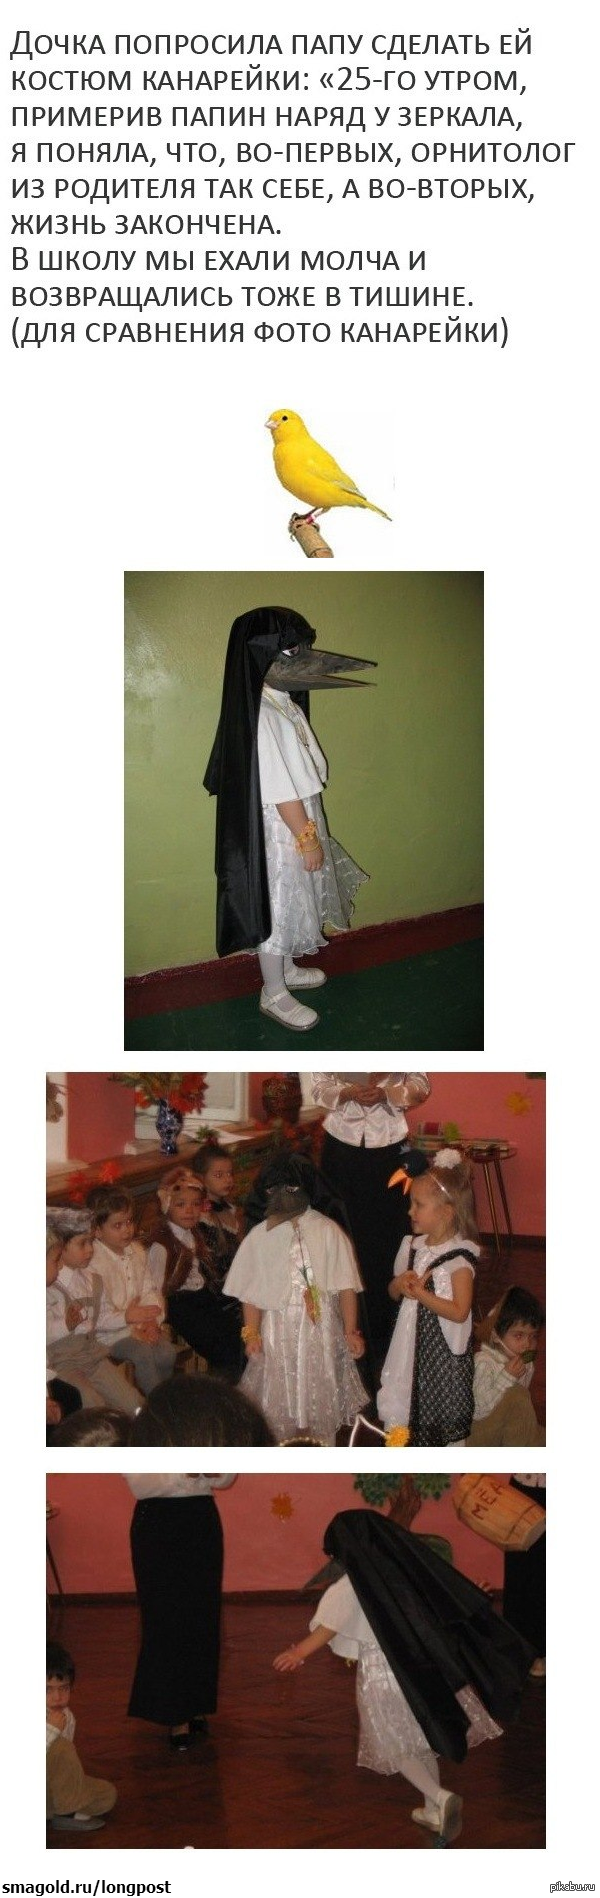 Дочка спрашивает папу. Костюм кентавра и канарейки. Костюм кентавра детский. Папа сделал костюм канарейки для Дочки. Костюм кентавра детский и канарейки.